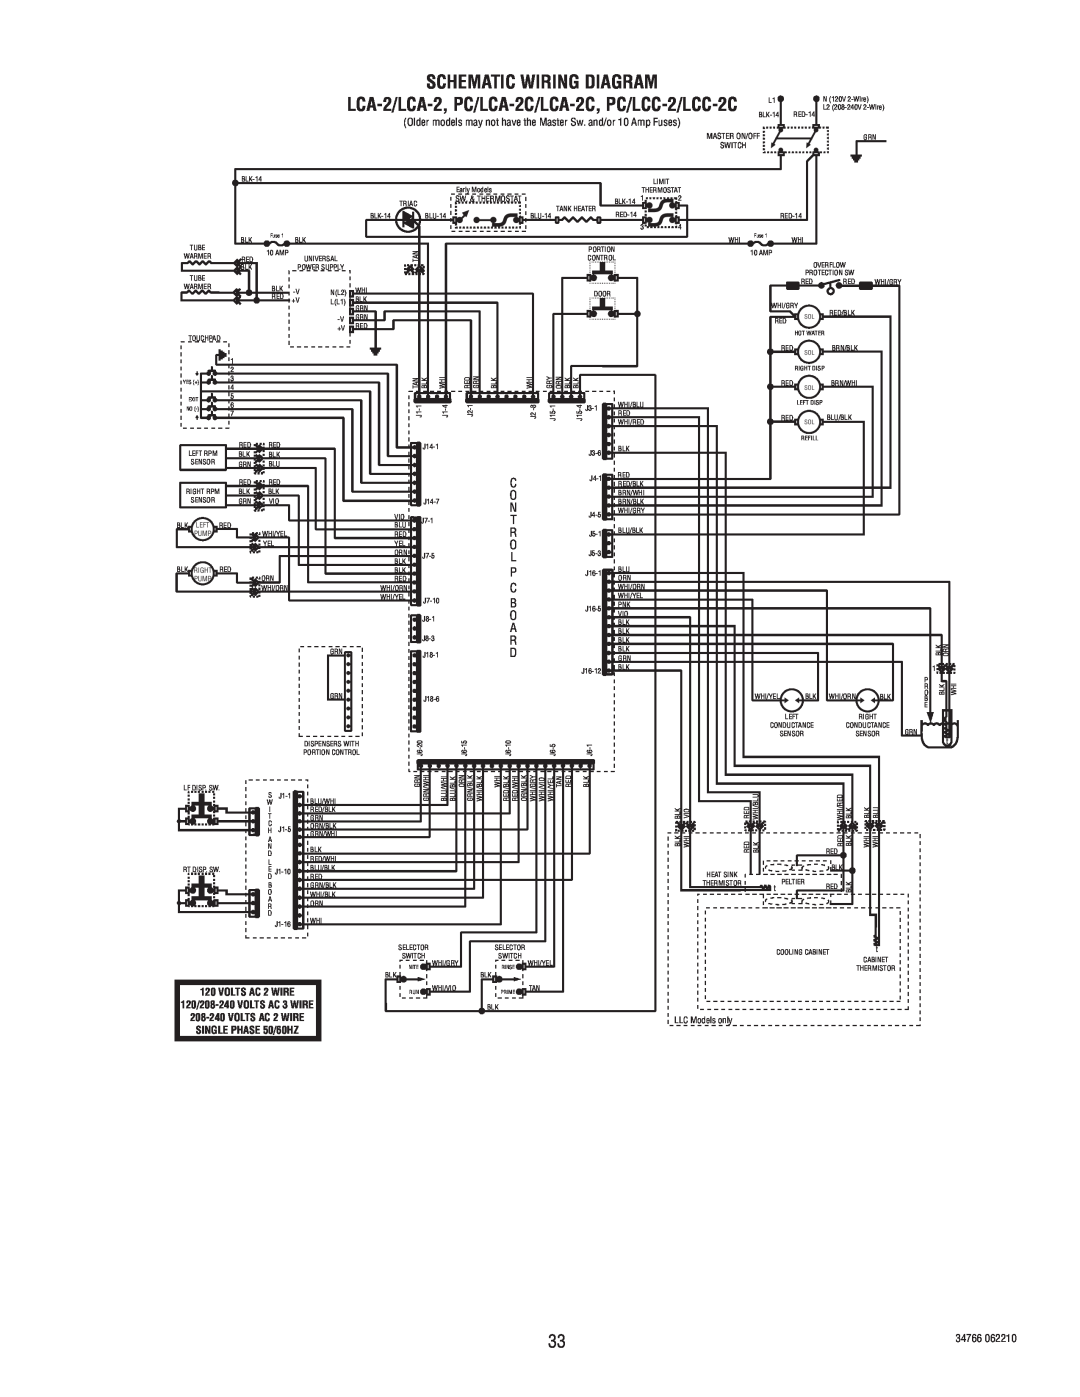 Bunn 34766.0000S manual Schematic Wiring Diagram, LCA-2/LCA-2, PC/LCA-2C/LCA-2C, PC/LCC-2/LCC-2C 